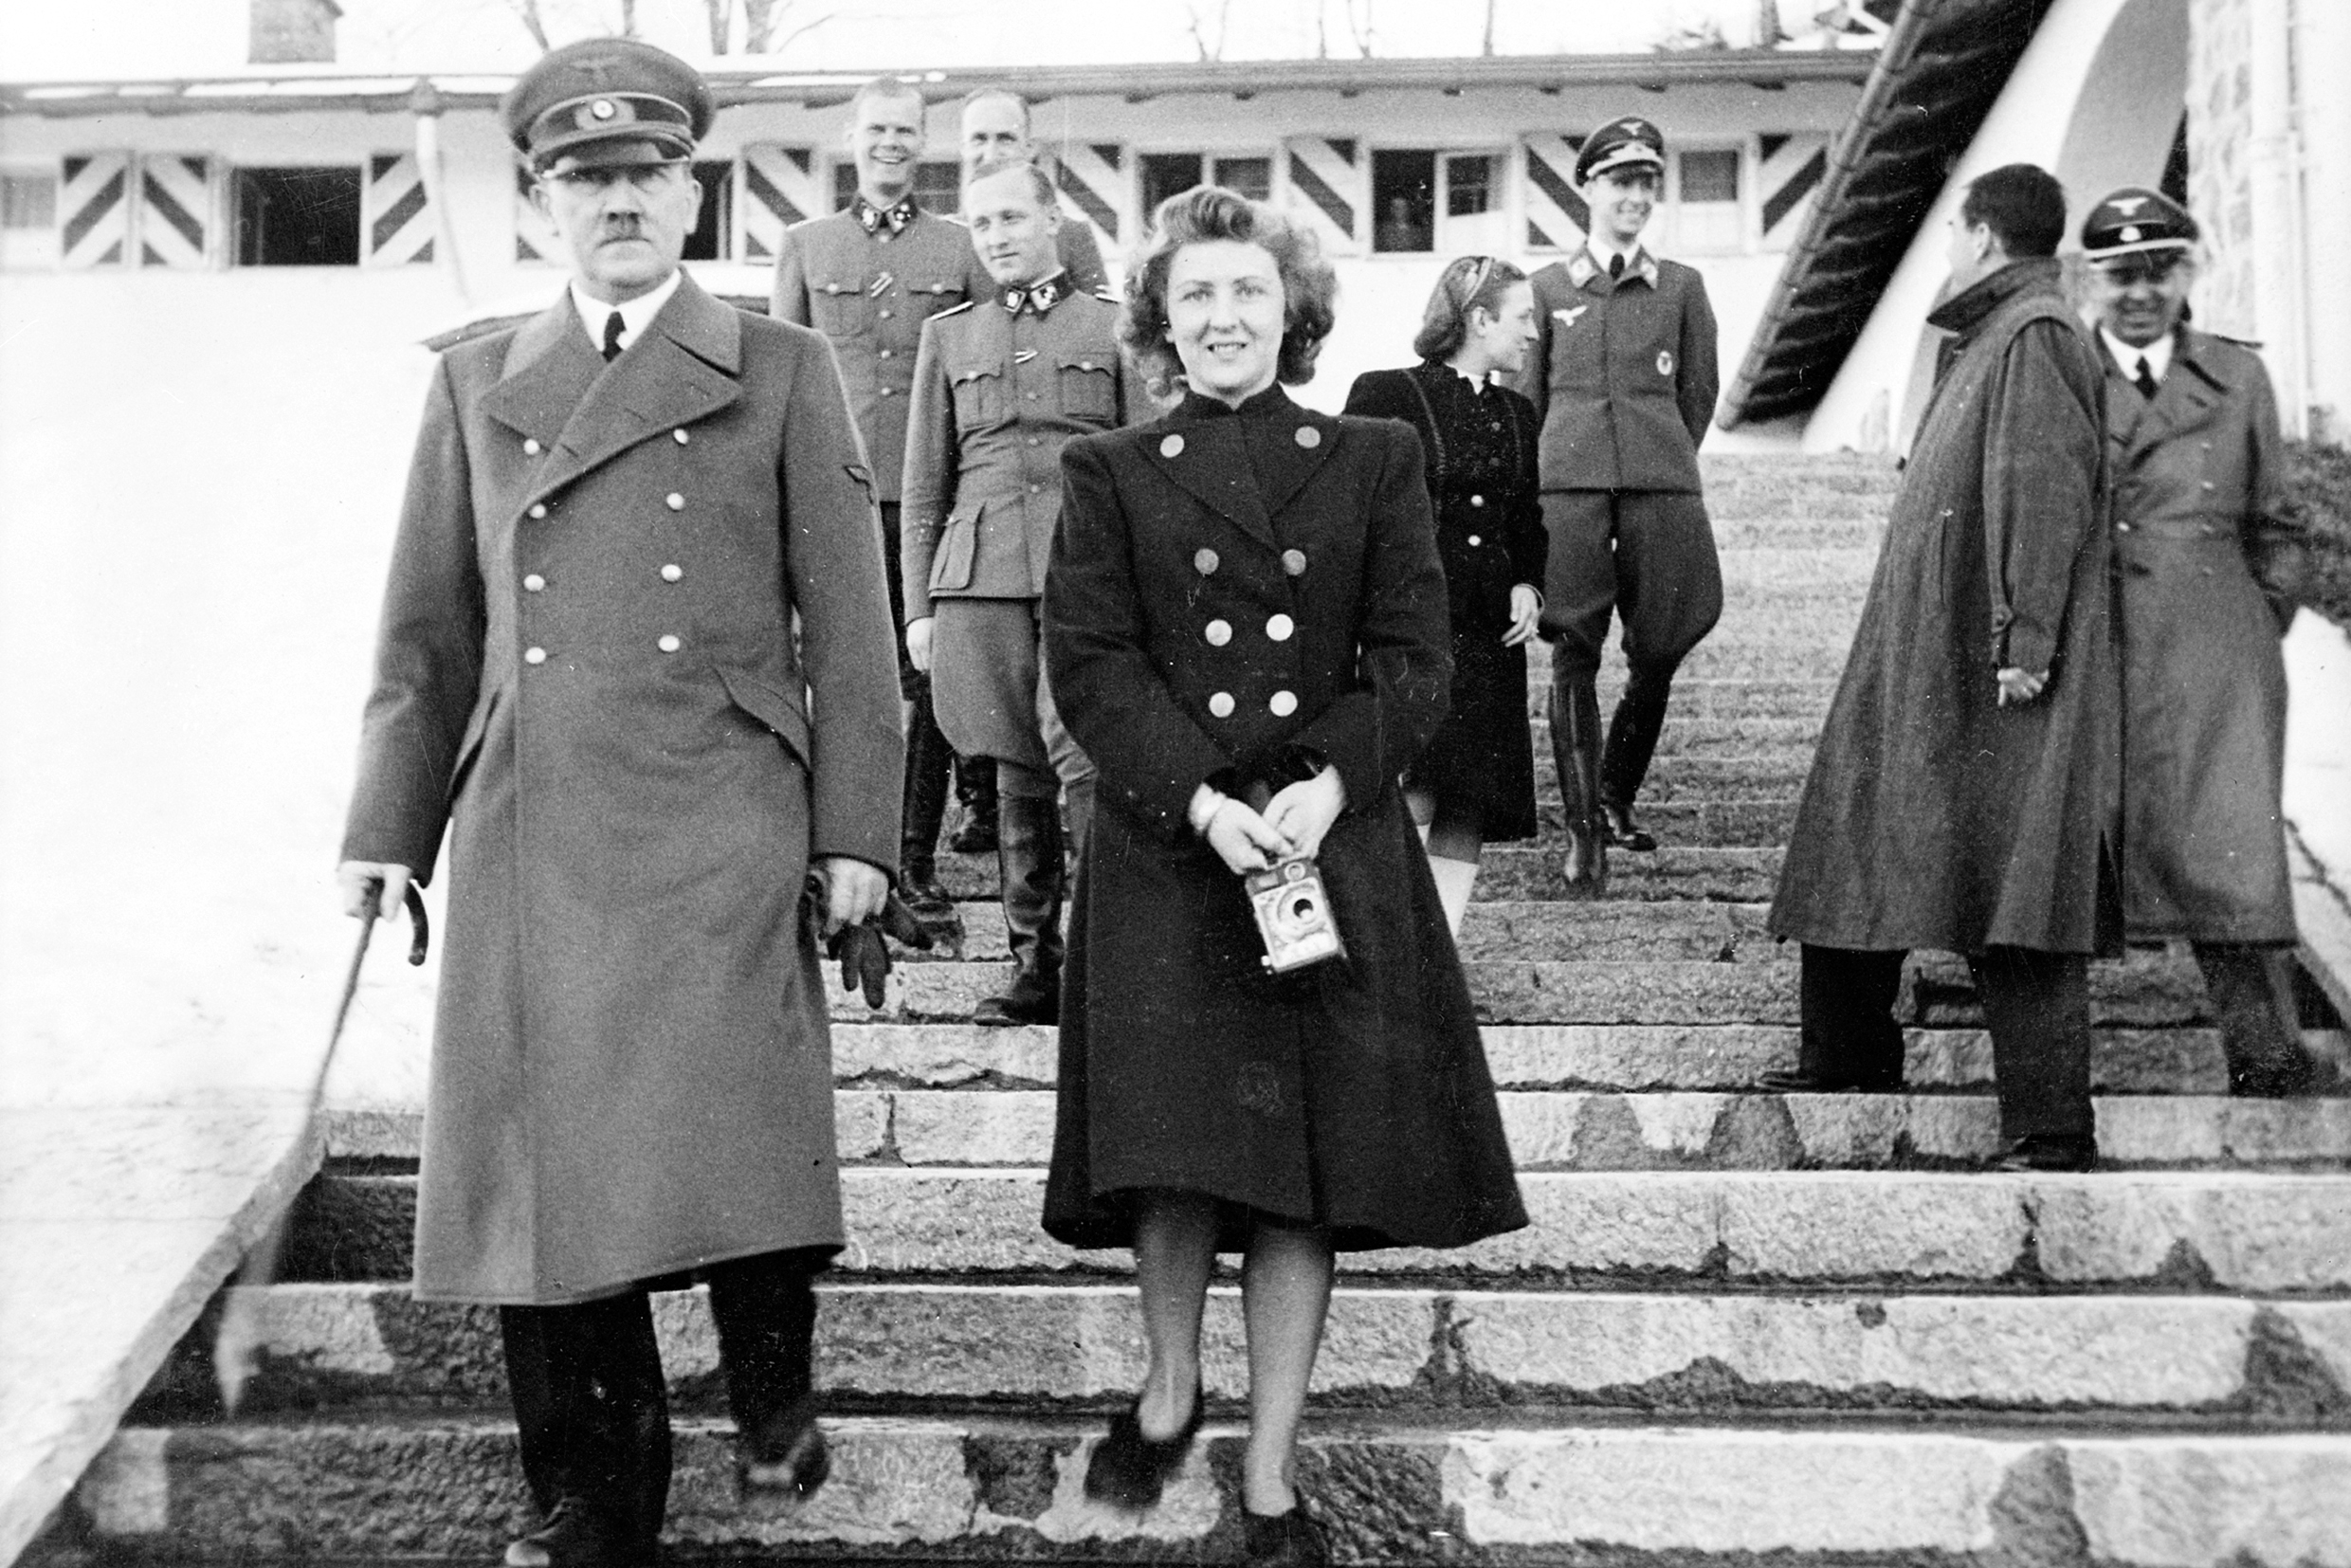 Eva Braun dans l'Intimité d'Hitler